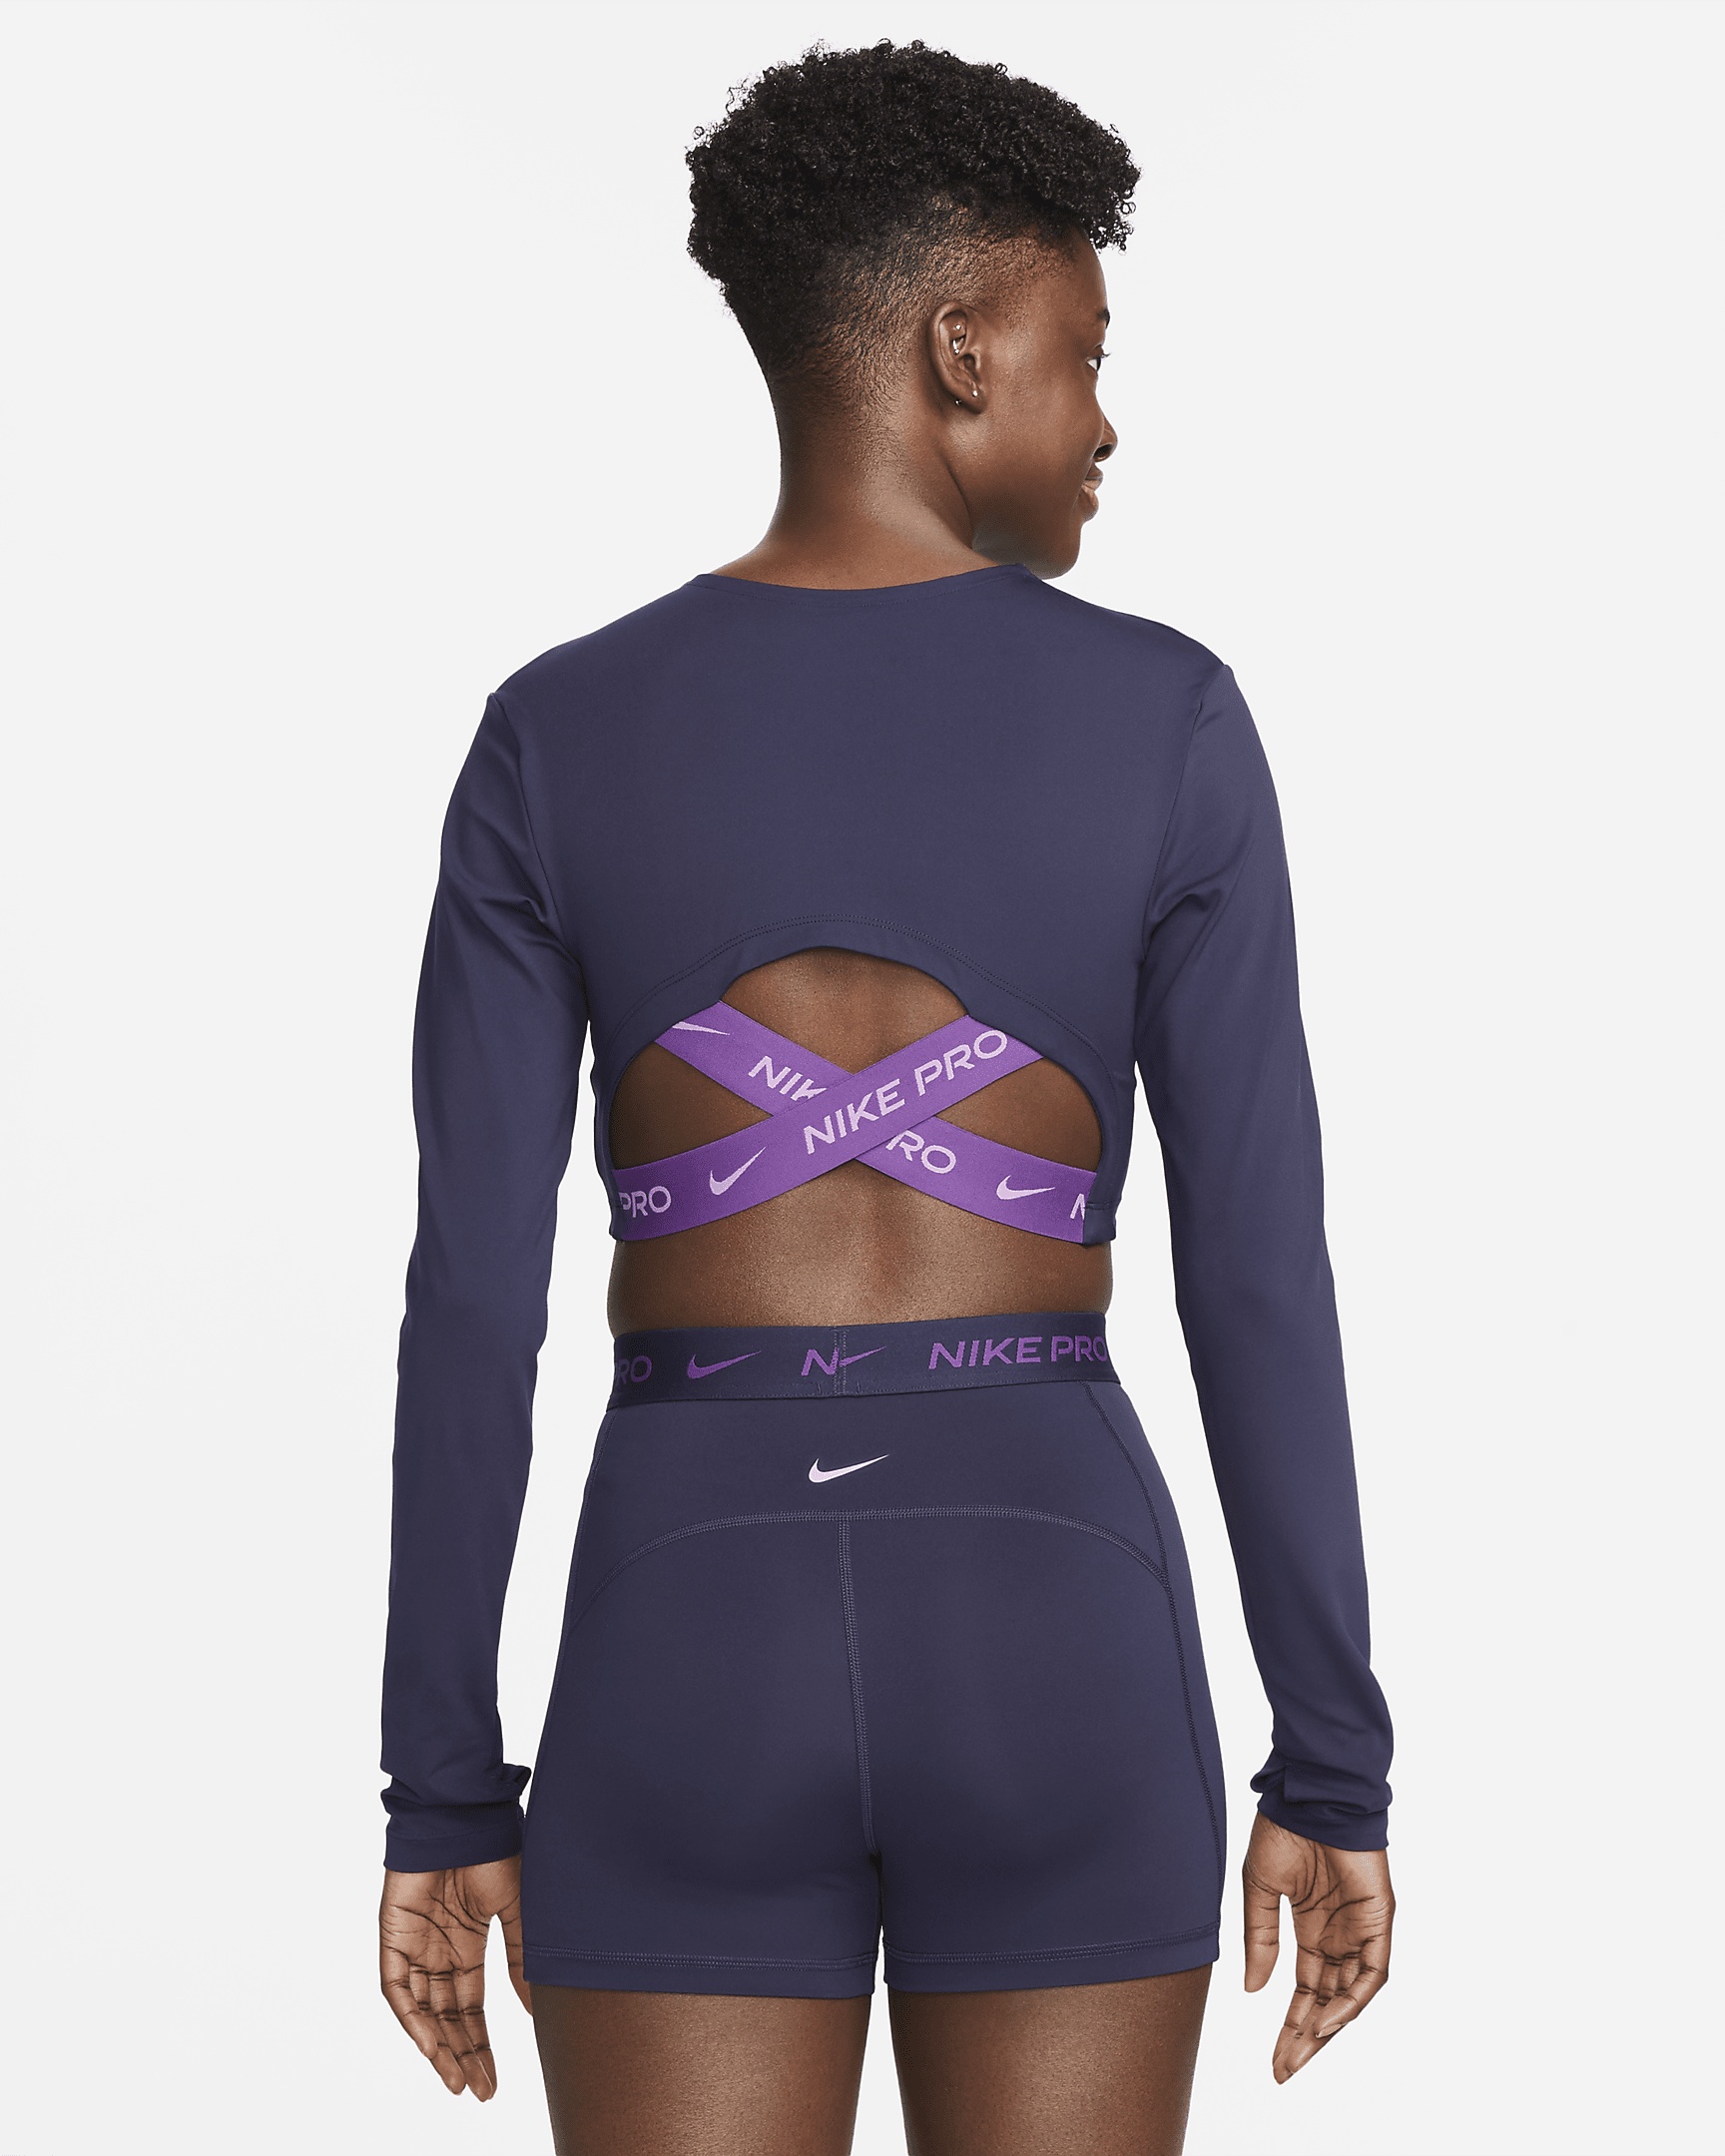 Women's Nike Pro Dri-FIT Cropped Long-Sleeve Top - 1